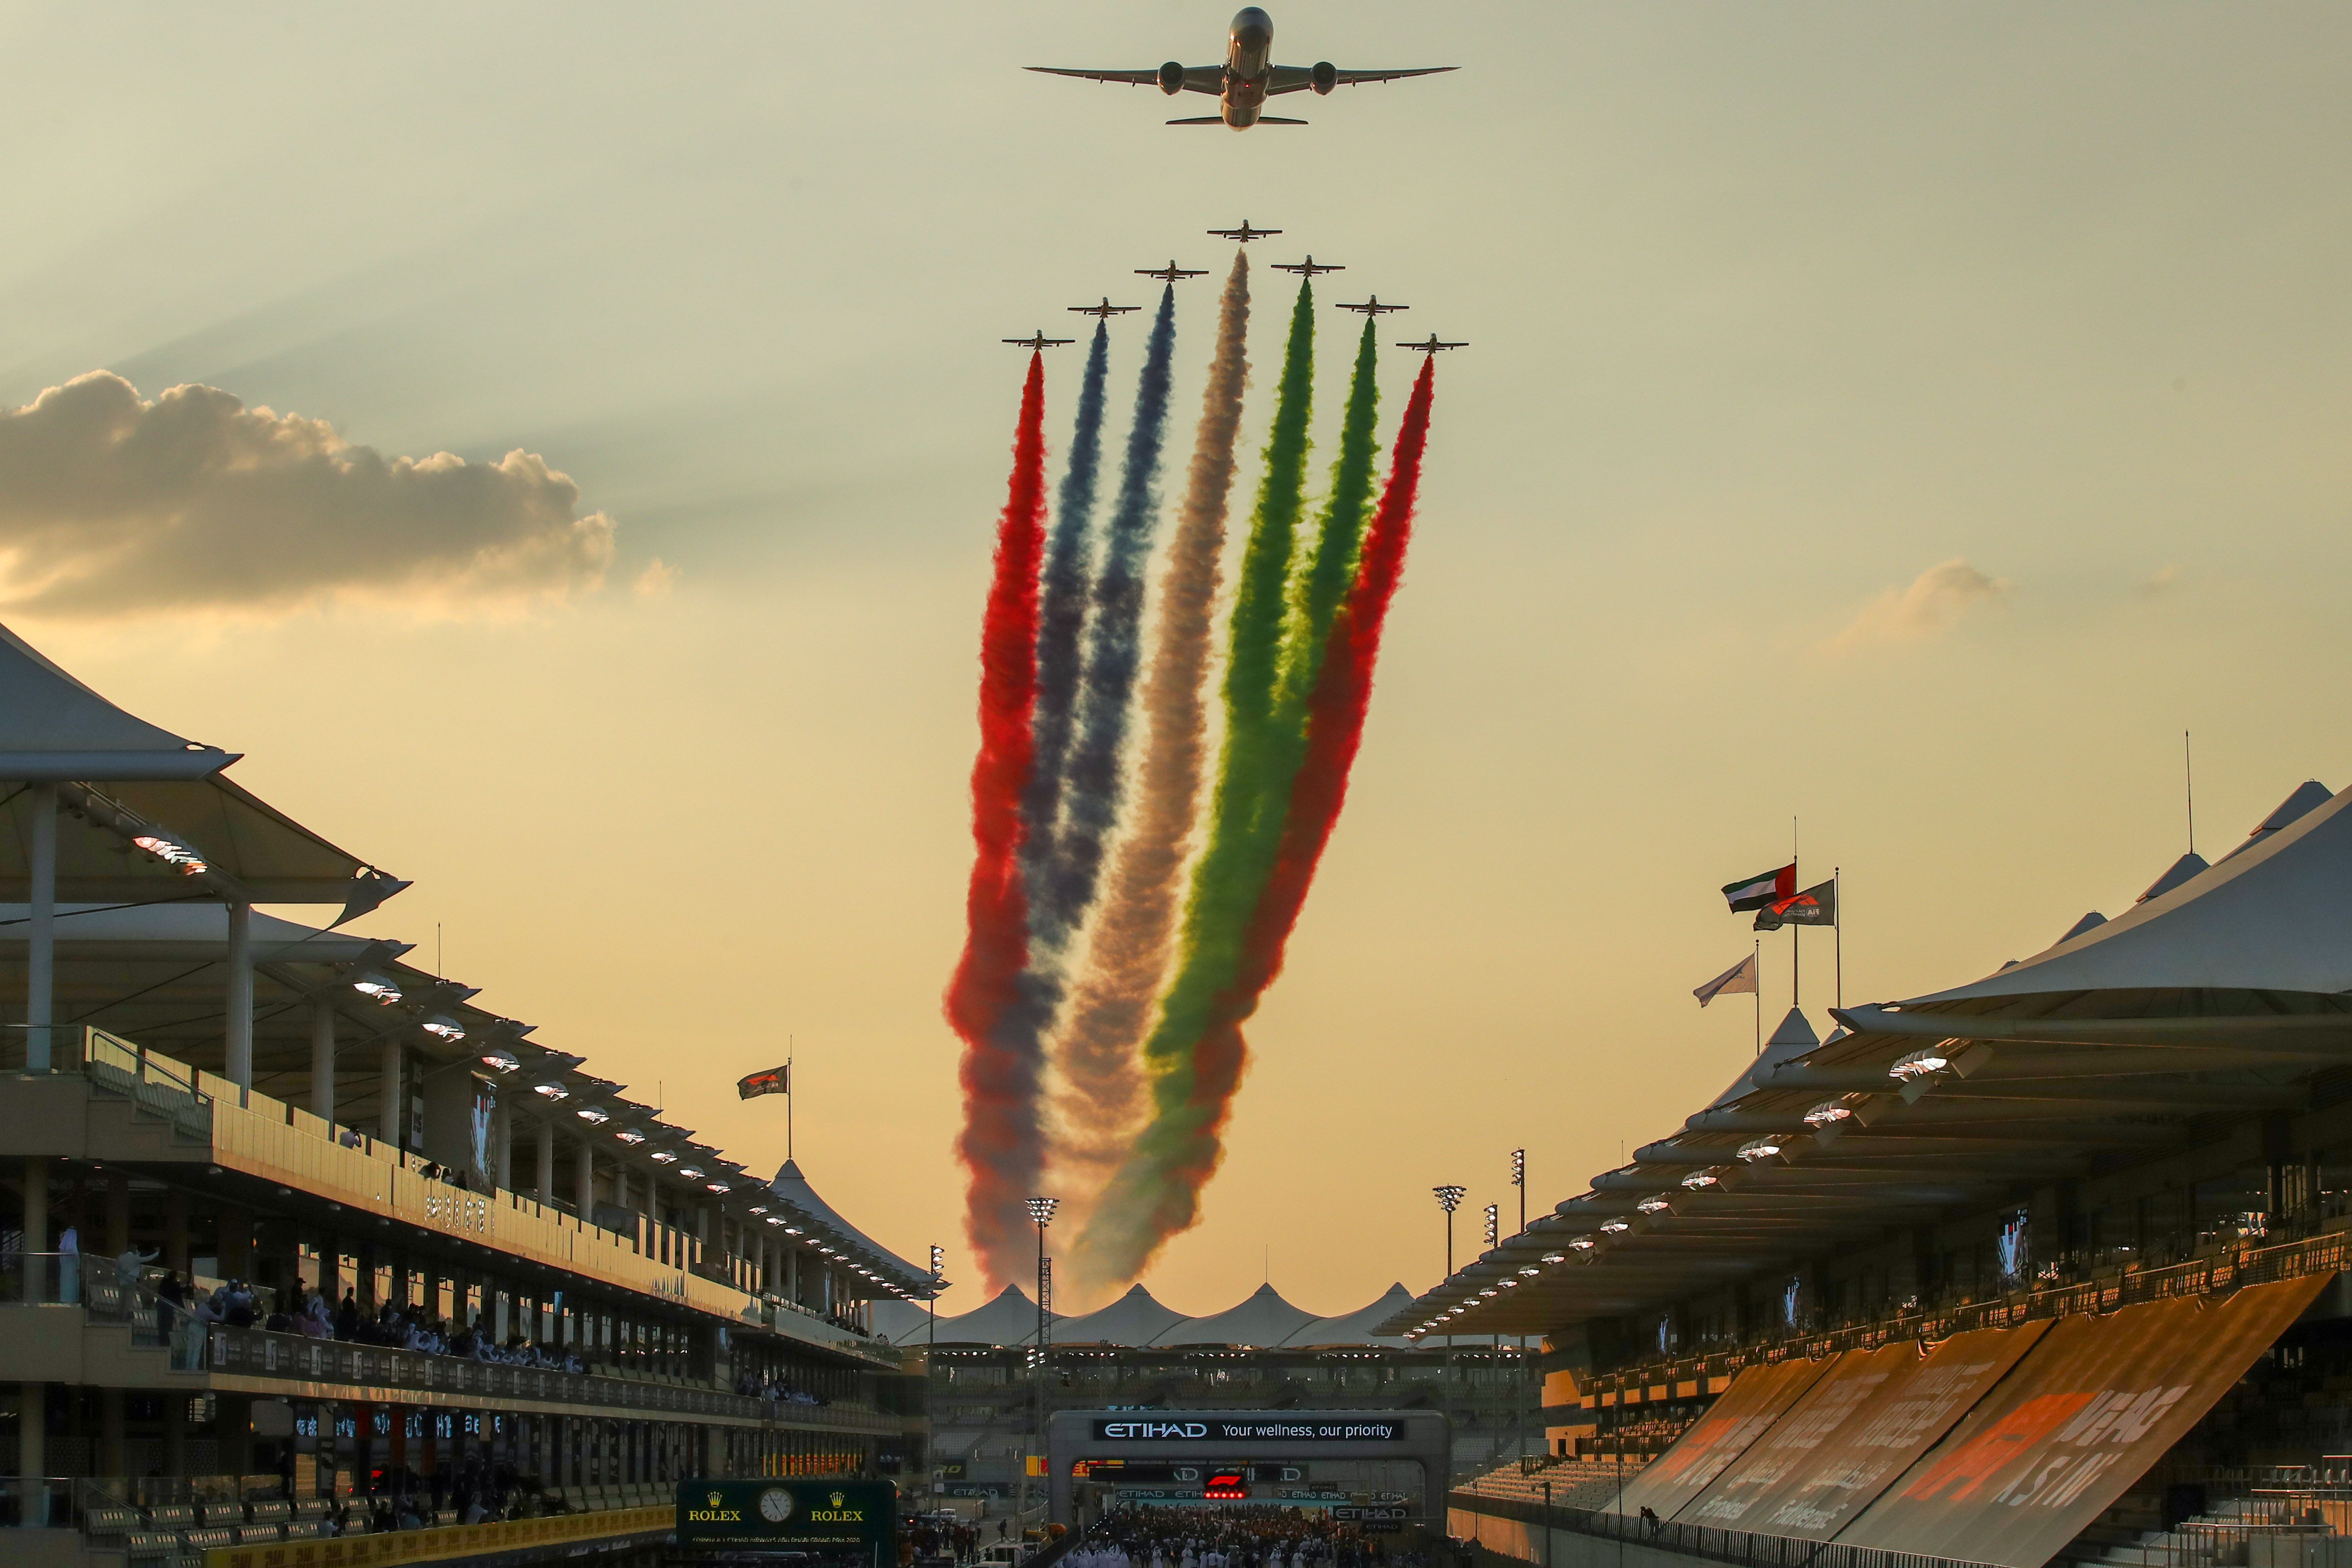 Boeing 787 Dreamliner flying over the Abu Dhabi F1 Grand Prix